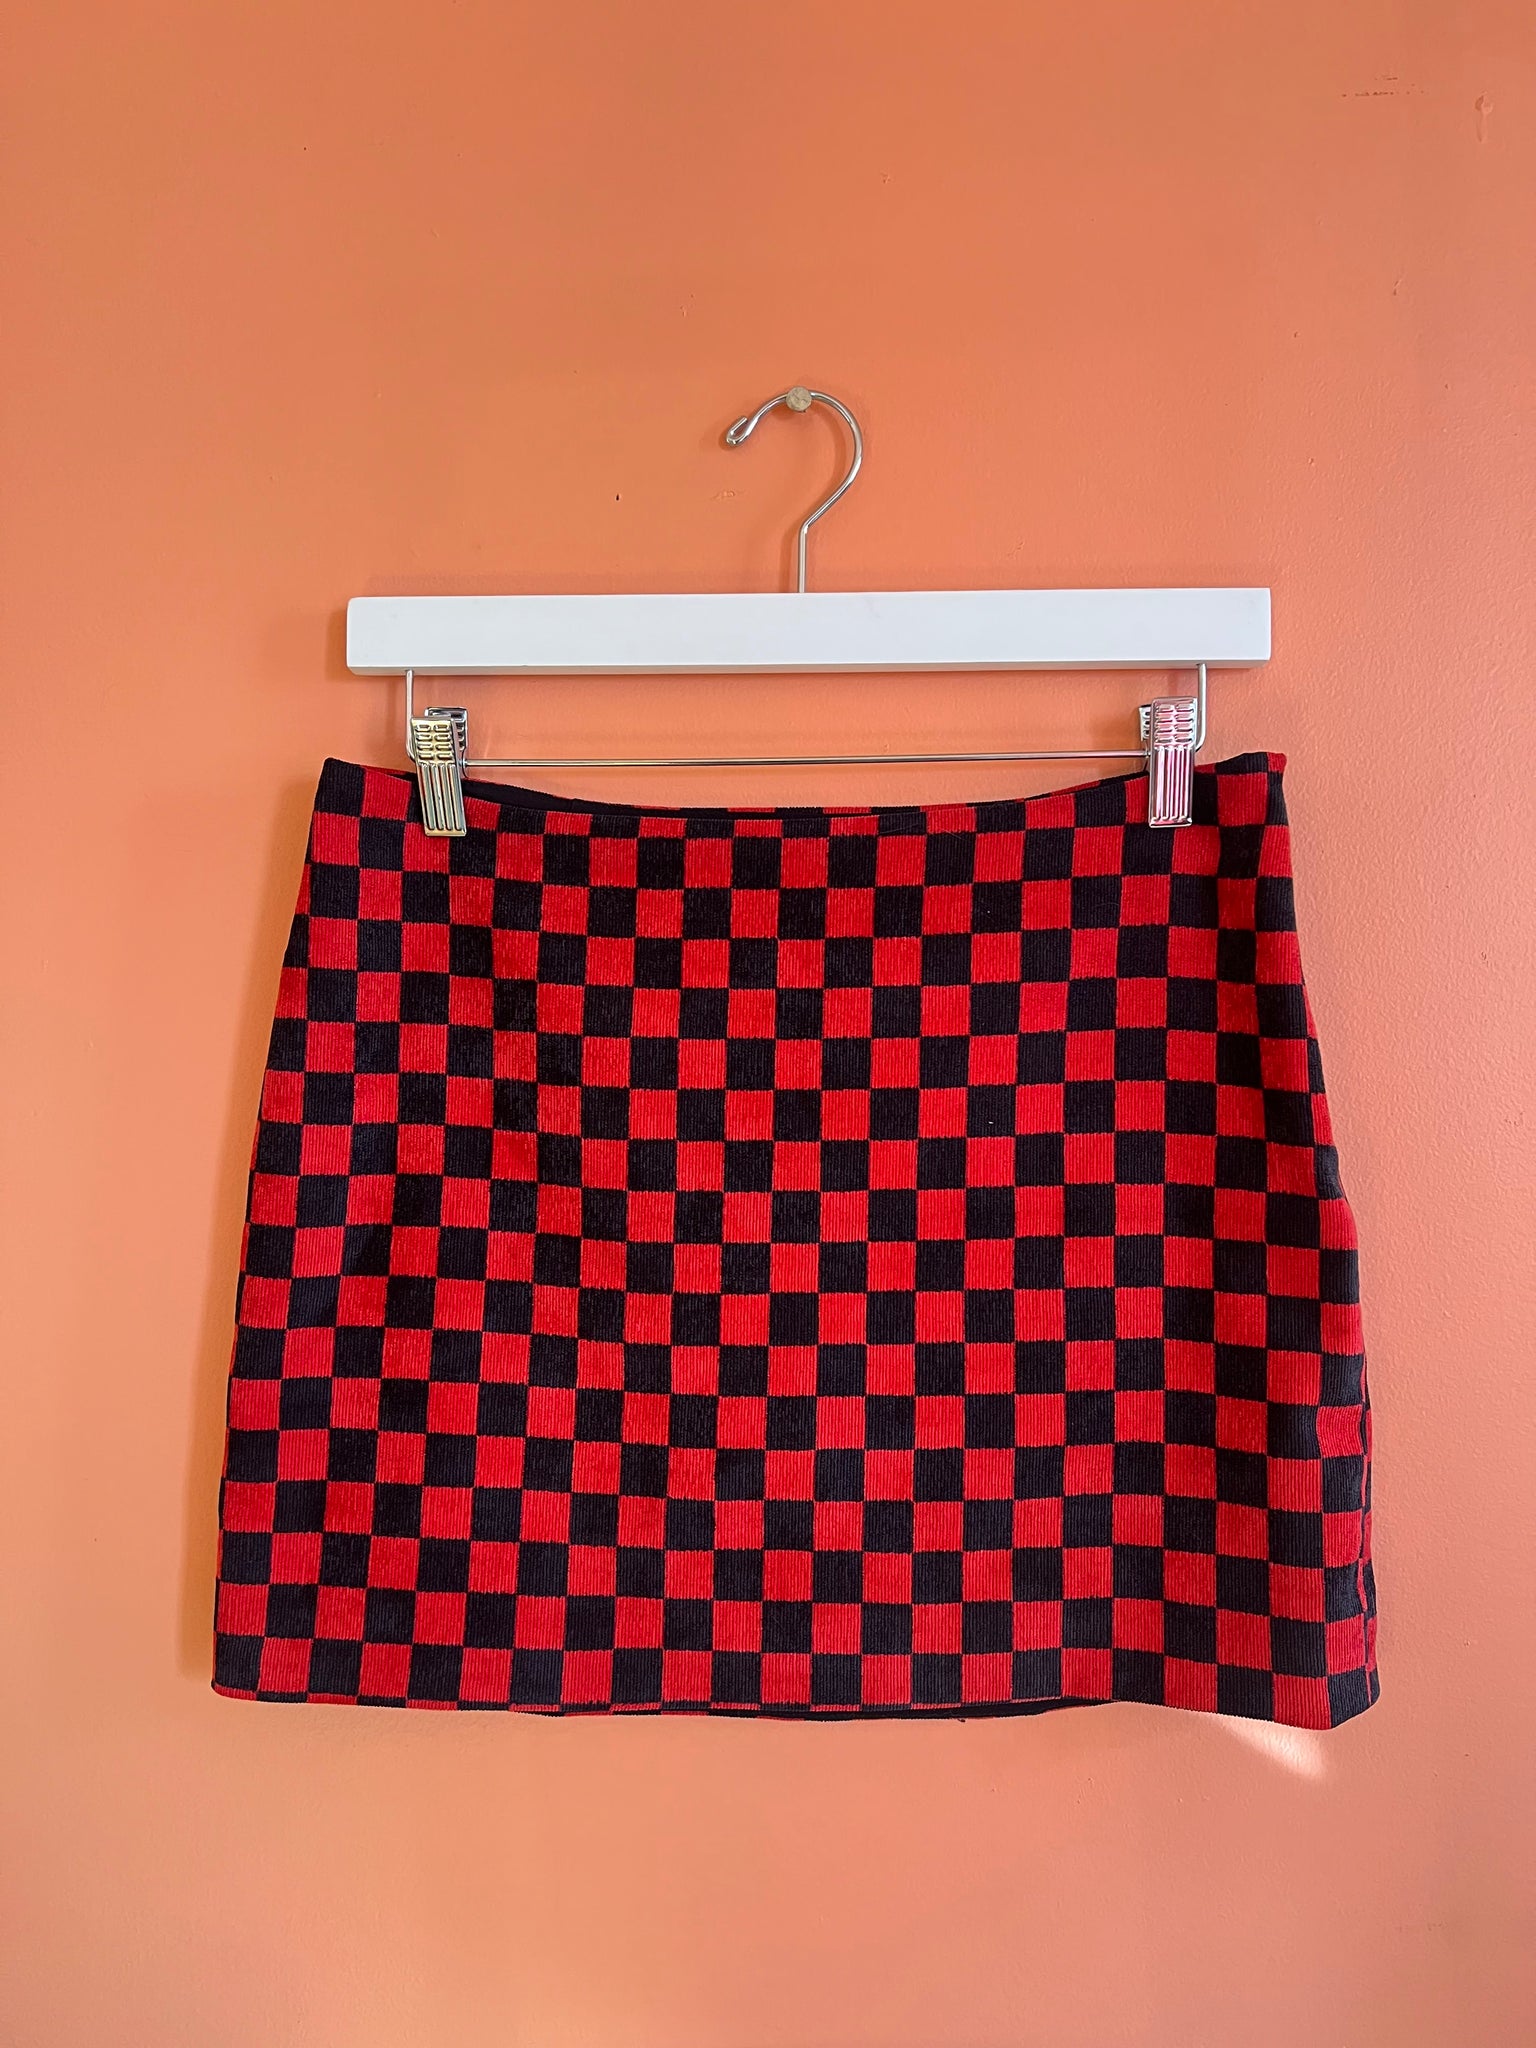 Delinquent Behavior Microscopic Skirt in Corduroy